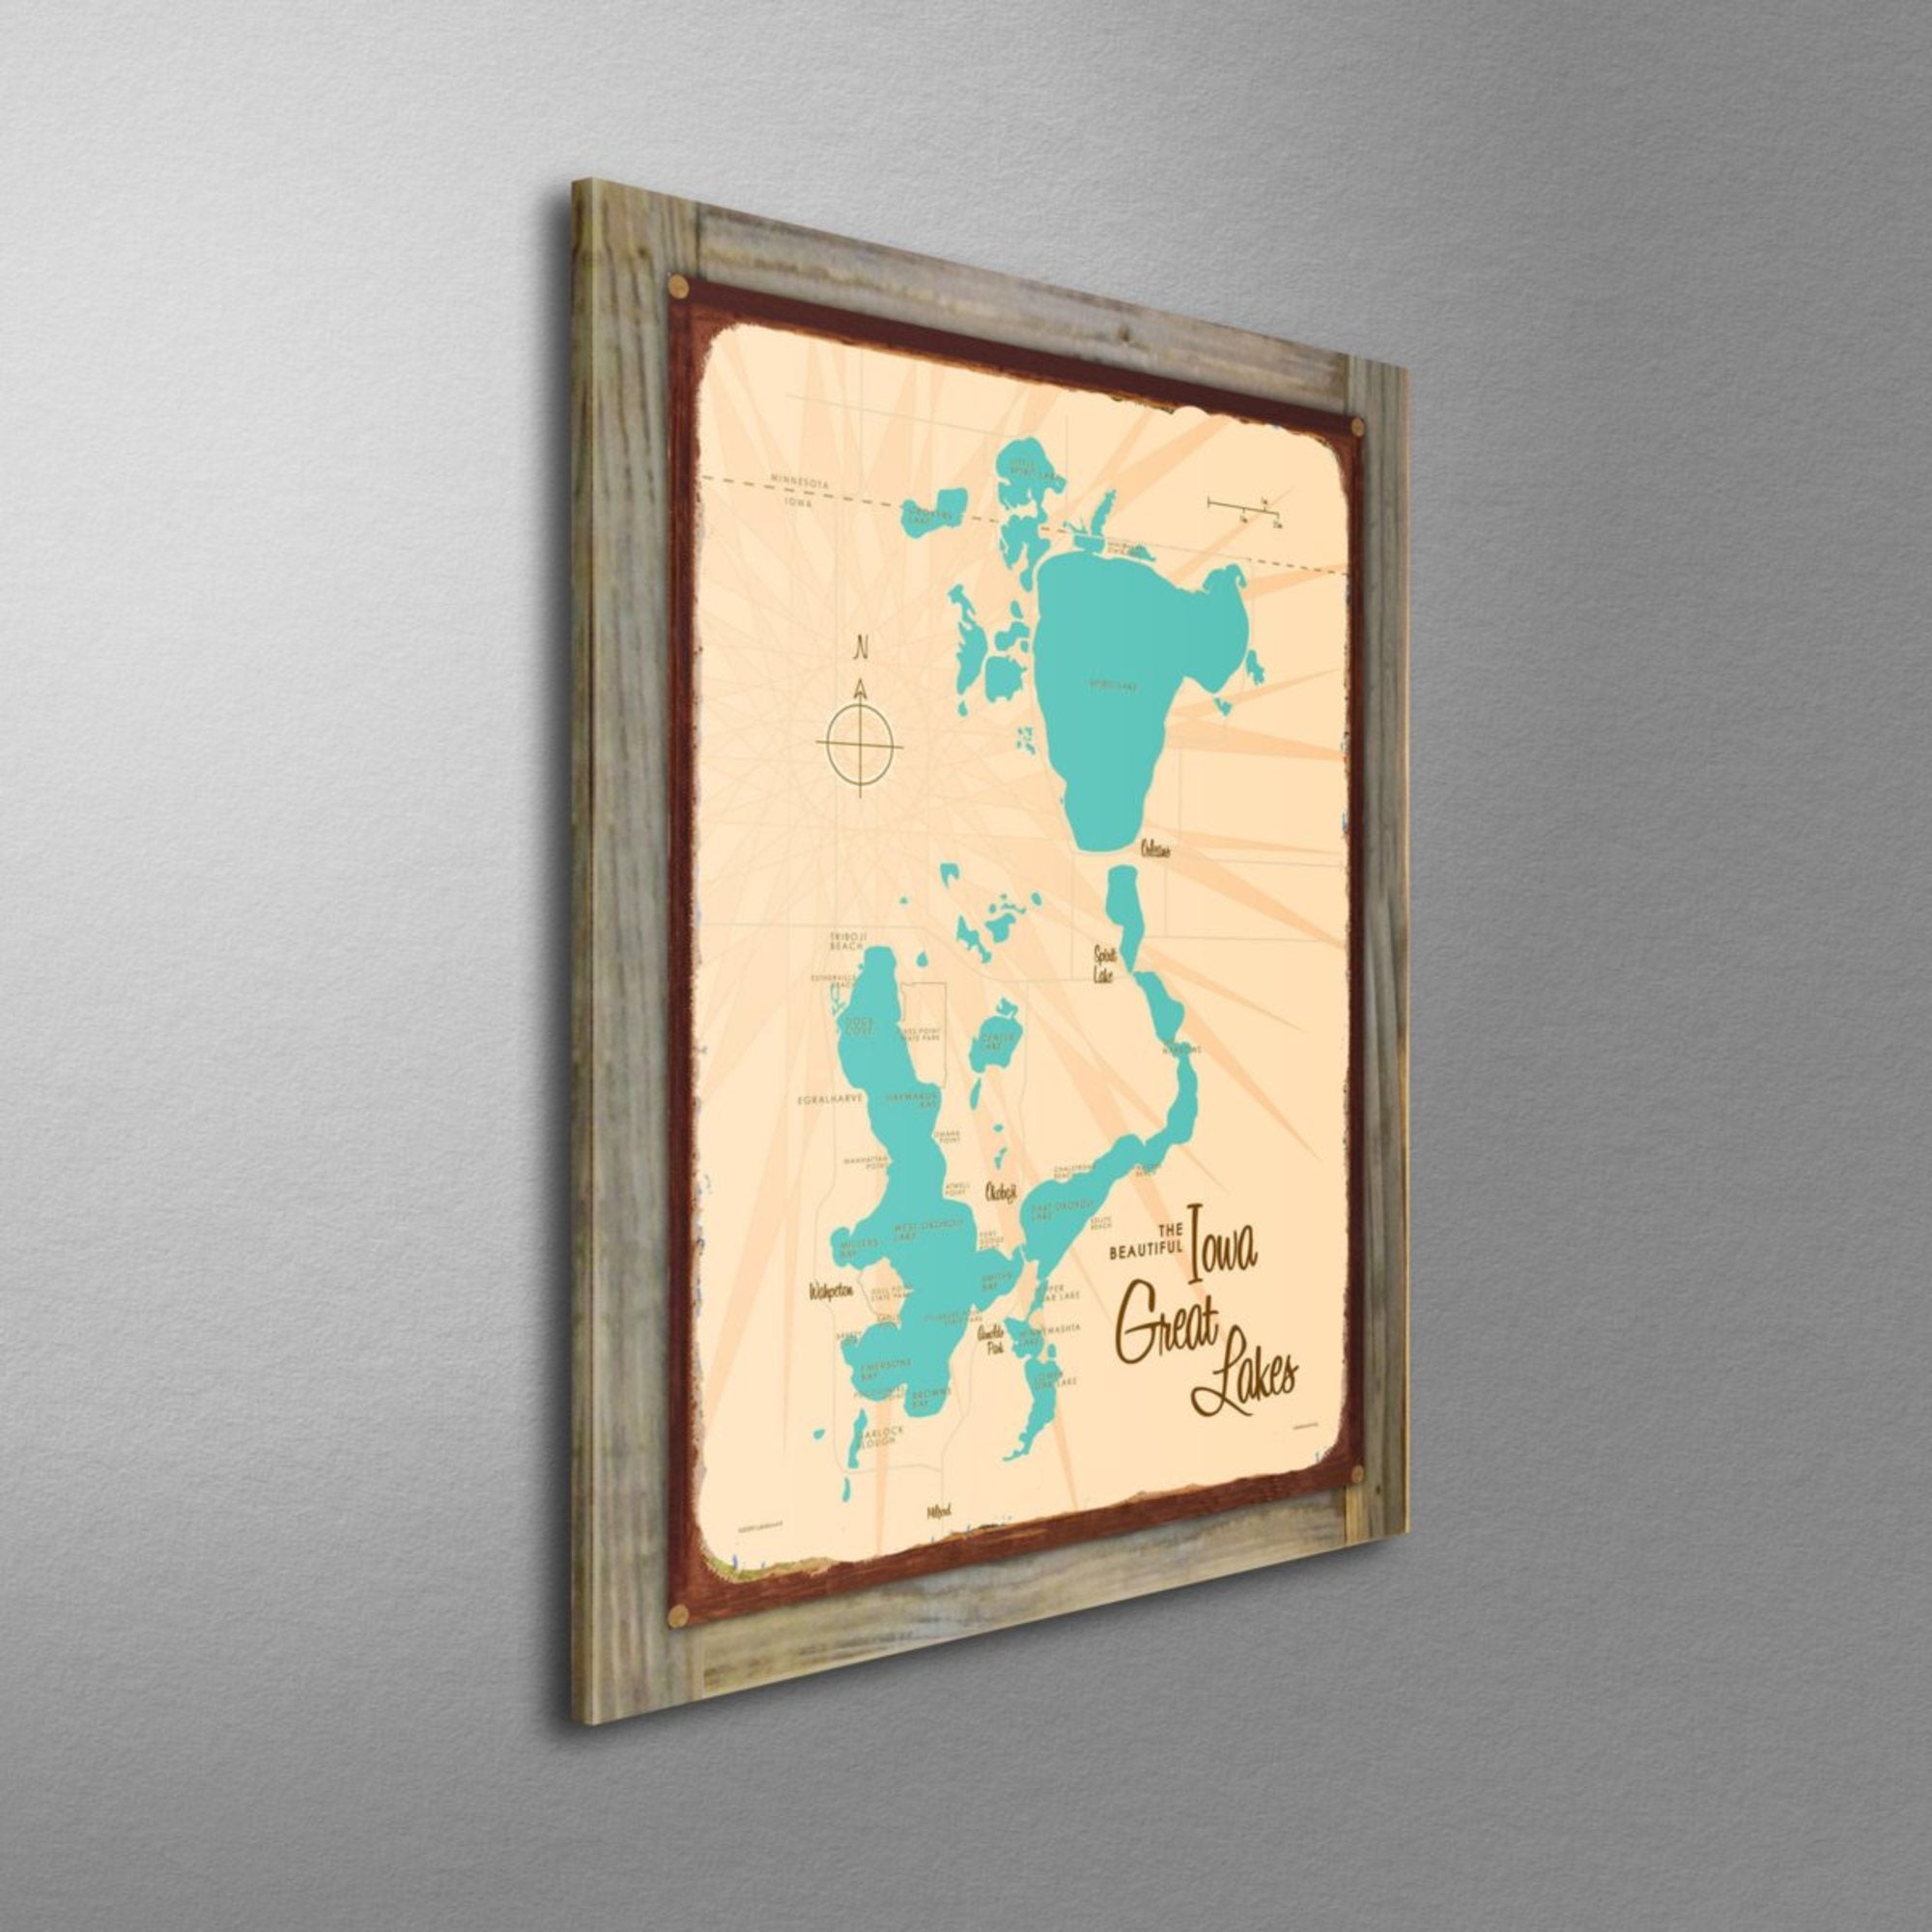 Iowa Great Lakes, Wood-Mounted Rustic Metal Sign Map Art